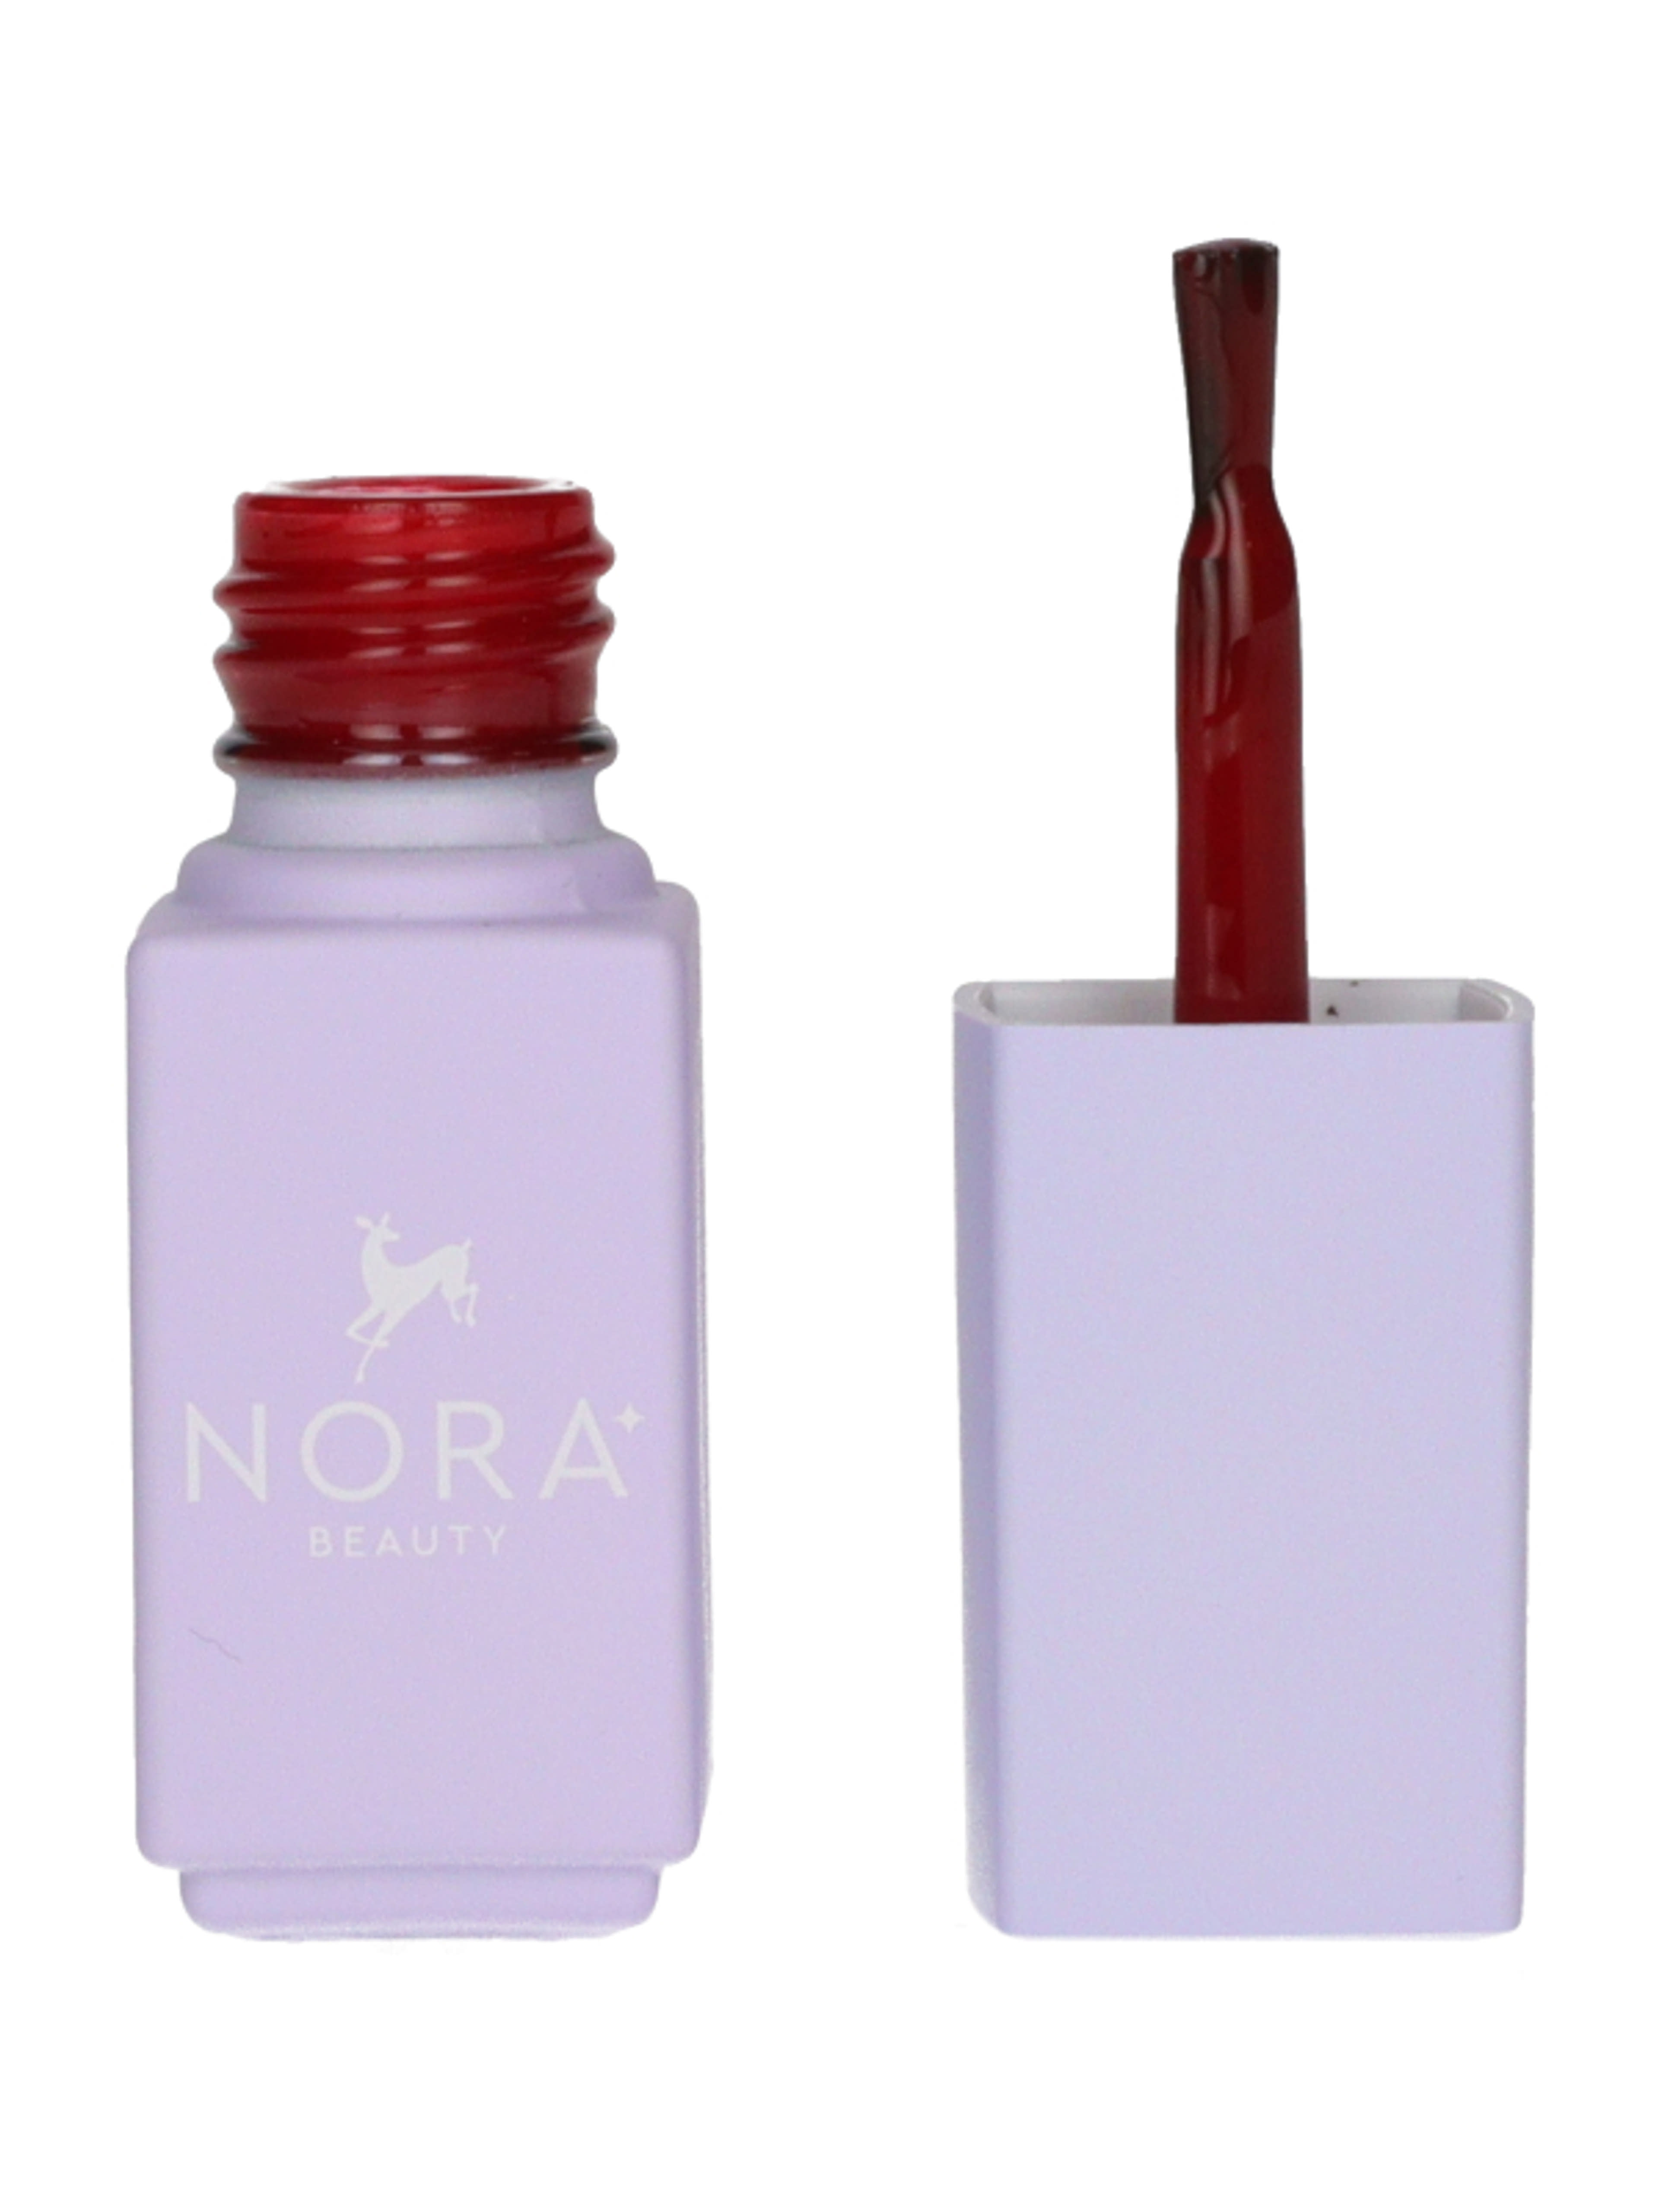 Nora Beauty UV lakkzselé /cn-01 cherry crush - 1 db-4